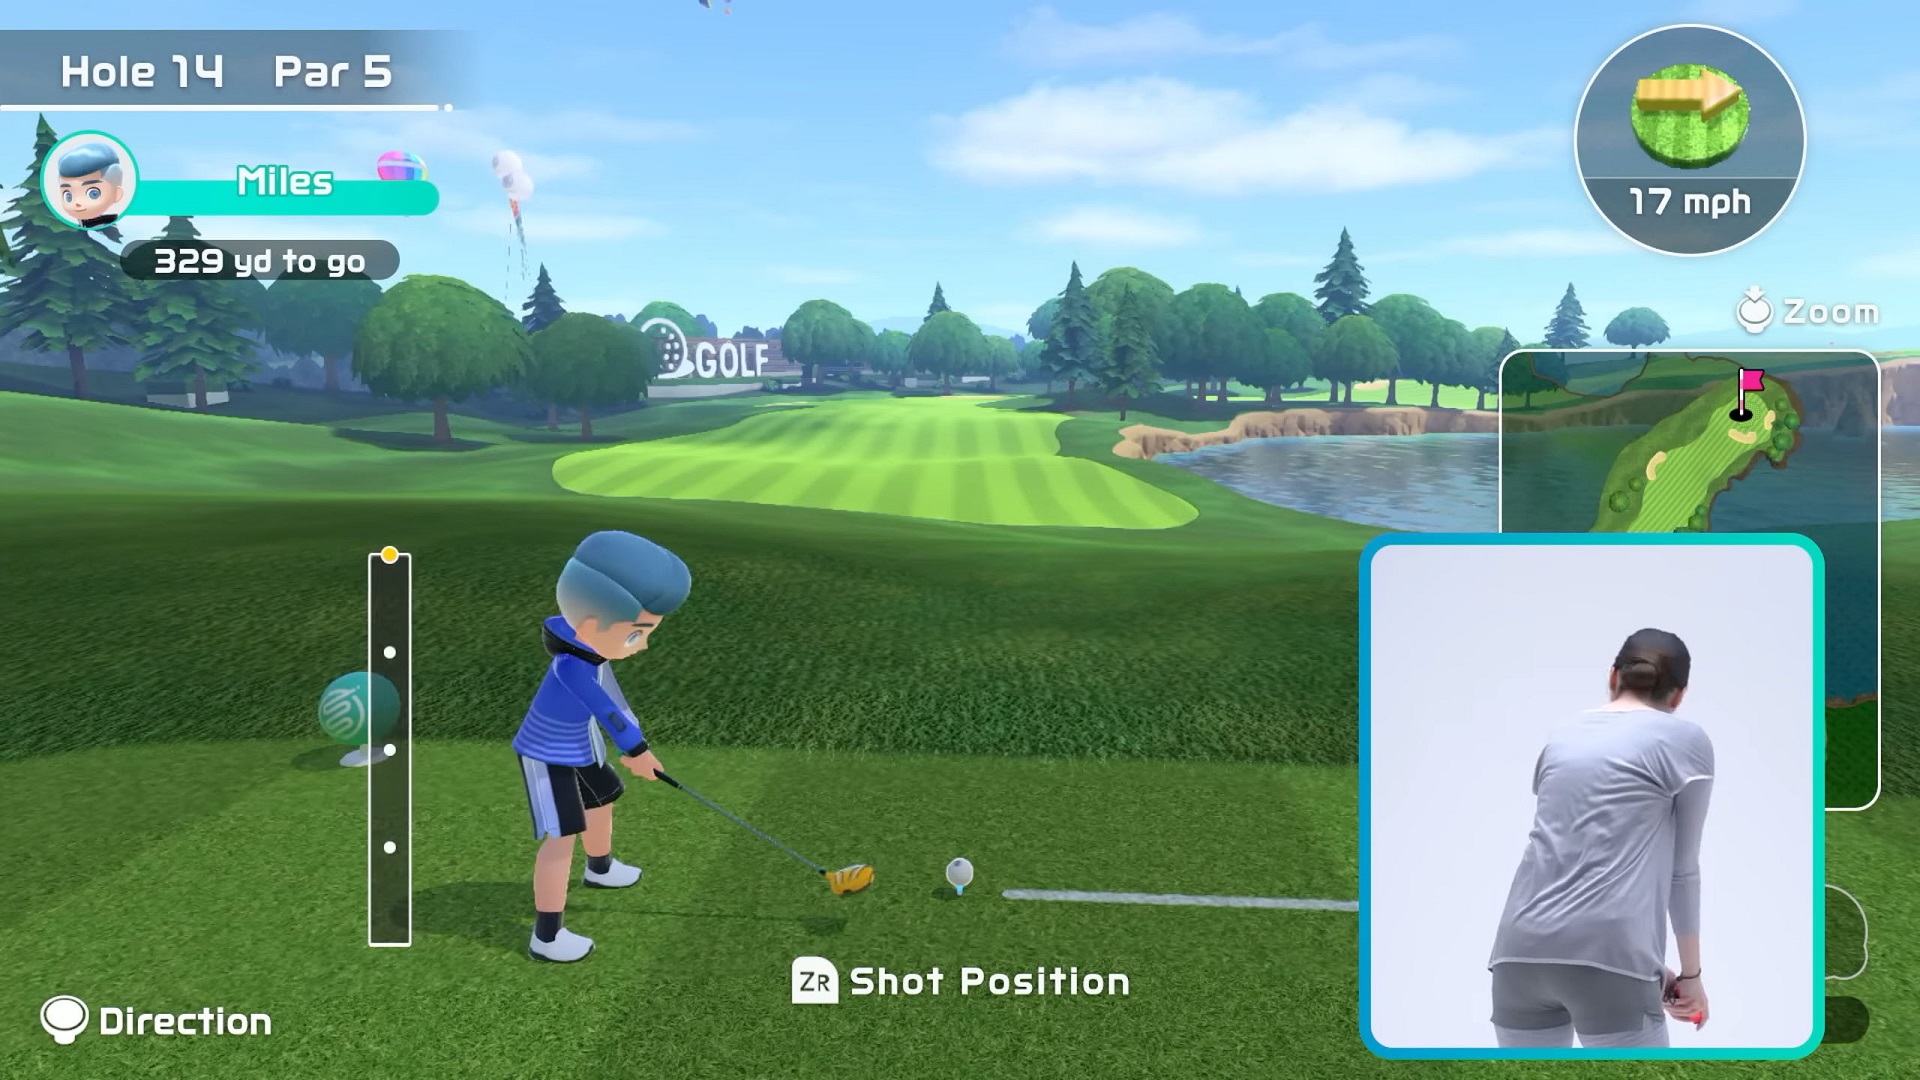 Nintendo Switch Sports finally adds golf in new update